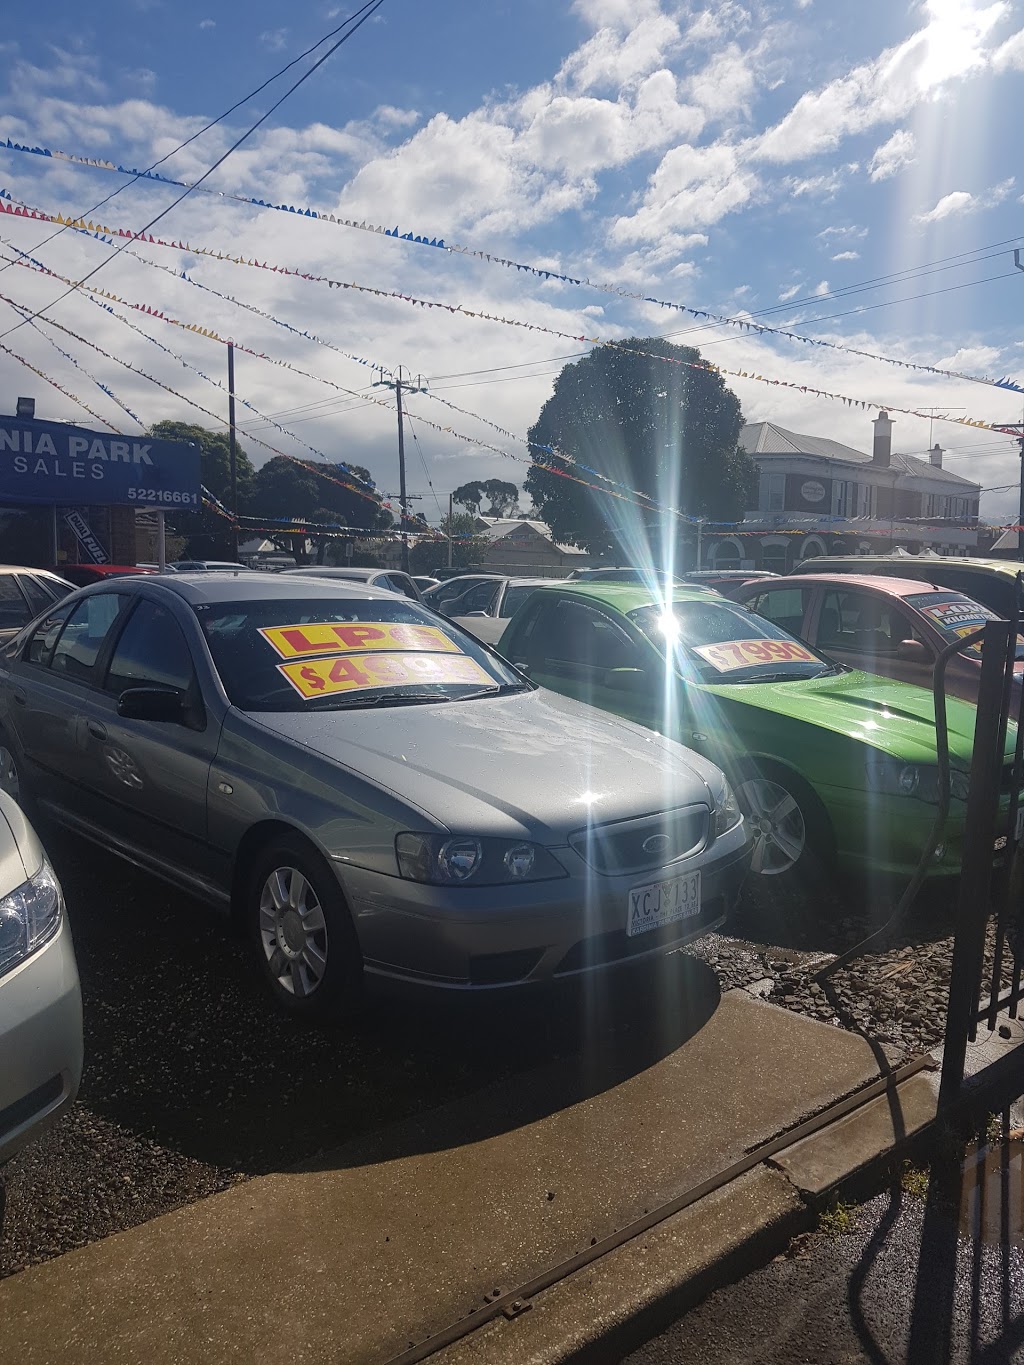 Kardinia Park Car Sales | 344 Latrobe Terrace, Newtown VIC 3220, Australia | Phone: (03) 5221 6661